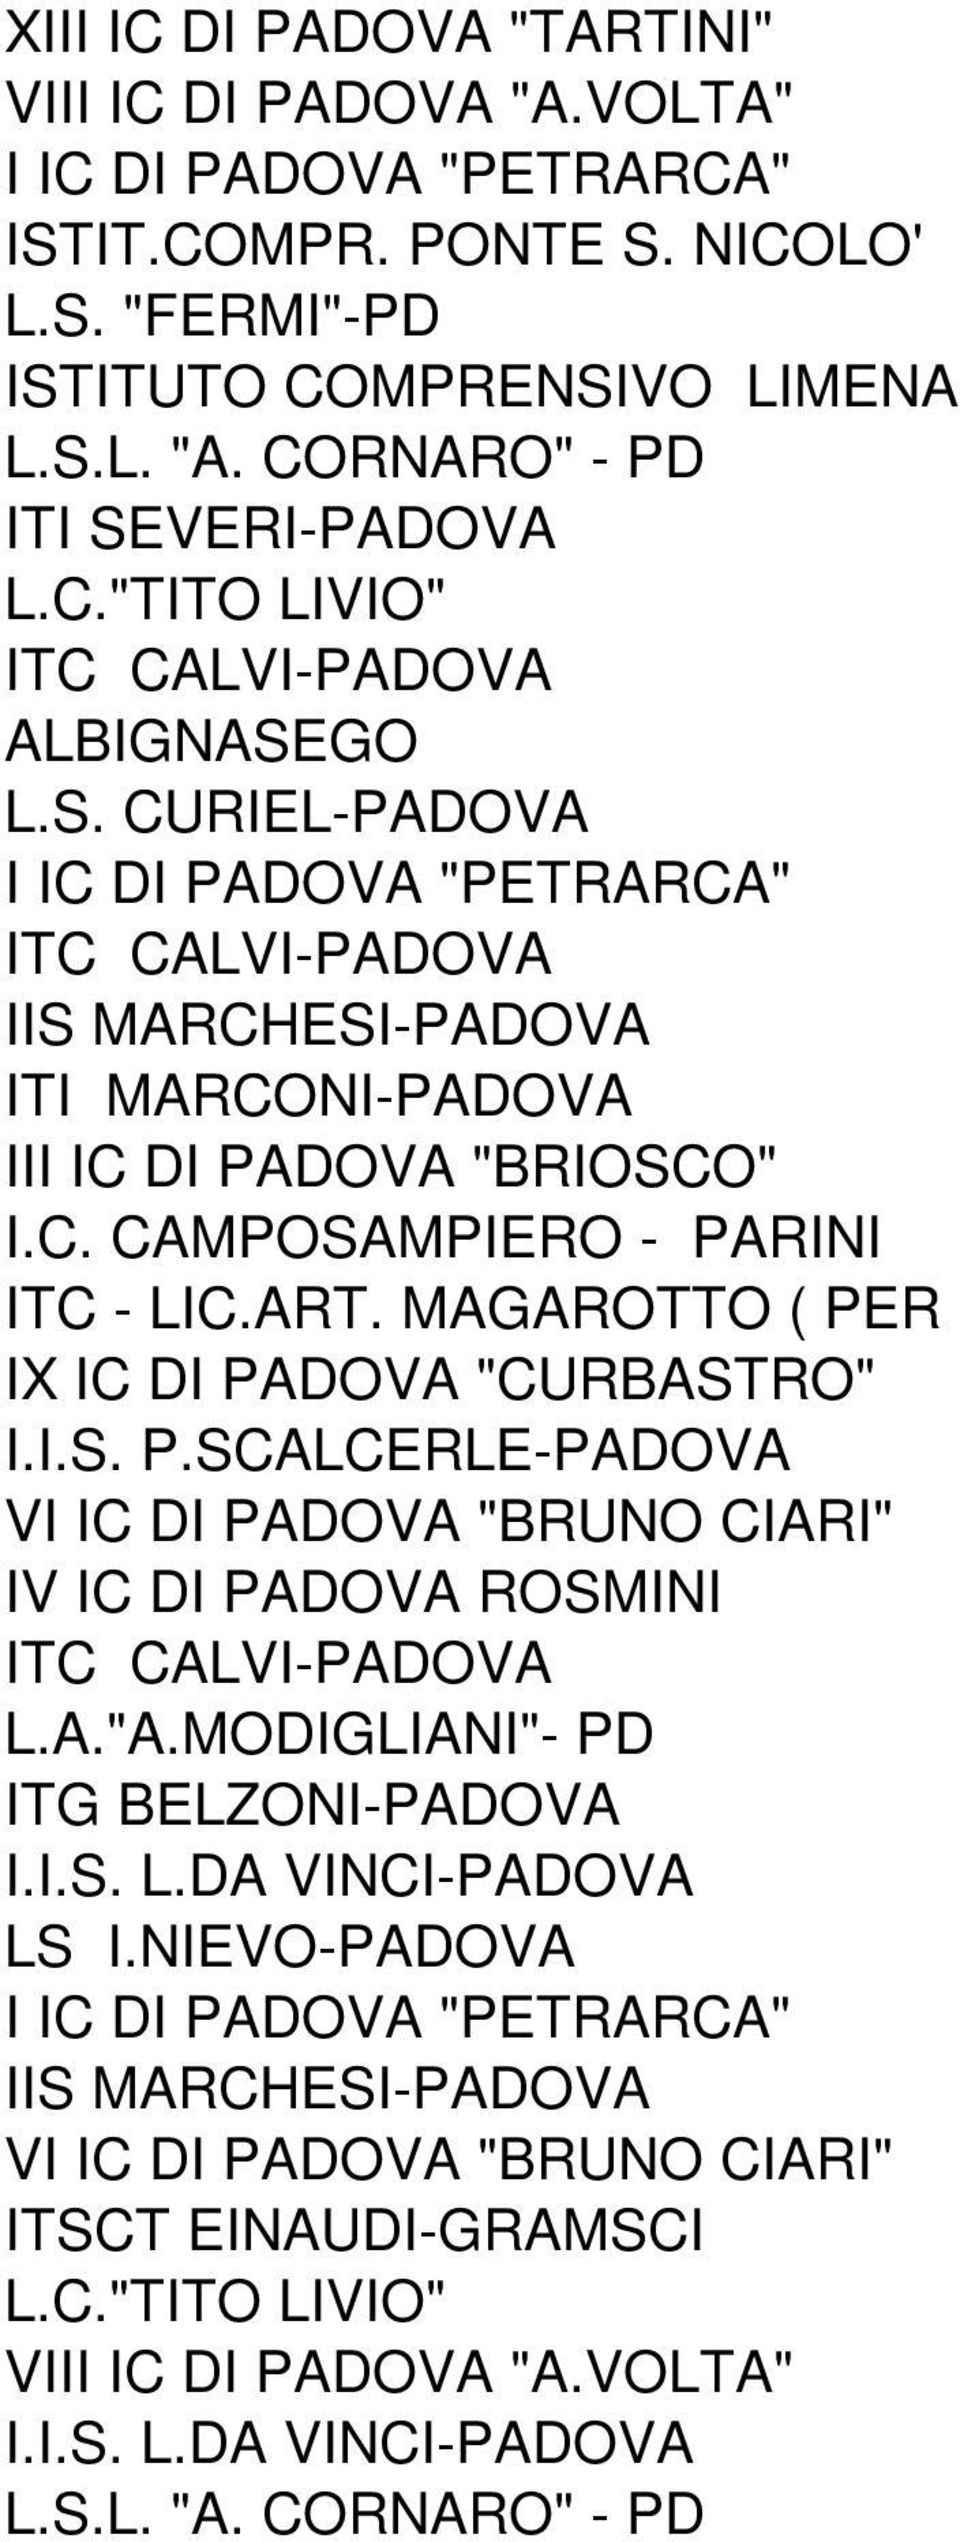 CORNARO" - PD ITI SEVERI-PADOVA ITC CALVI-PADOVA ALBIGNASEGO ITC CALVI-PADOVA IIS MARCHESI-PADOVA ITI MARCONI-PADOVA III IC DI PADOVA "BRIOSCO" I.C. CAMPOSAMPIERO - PARINI ITC - LIC.